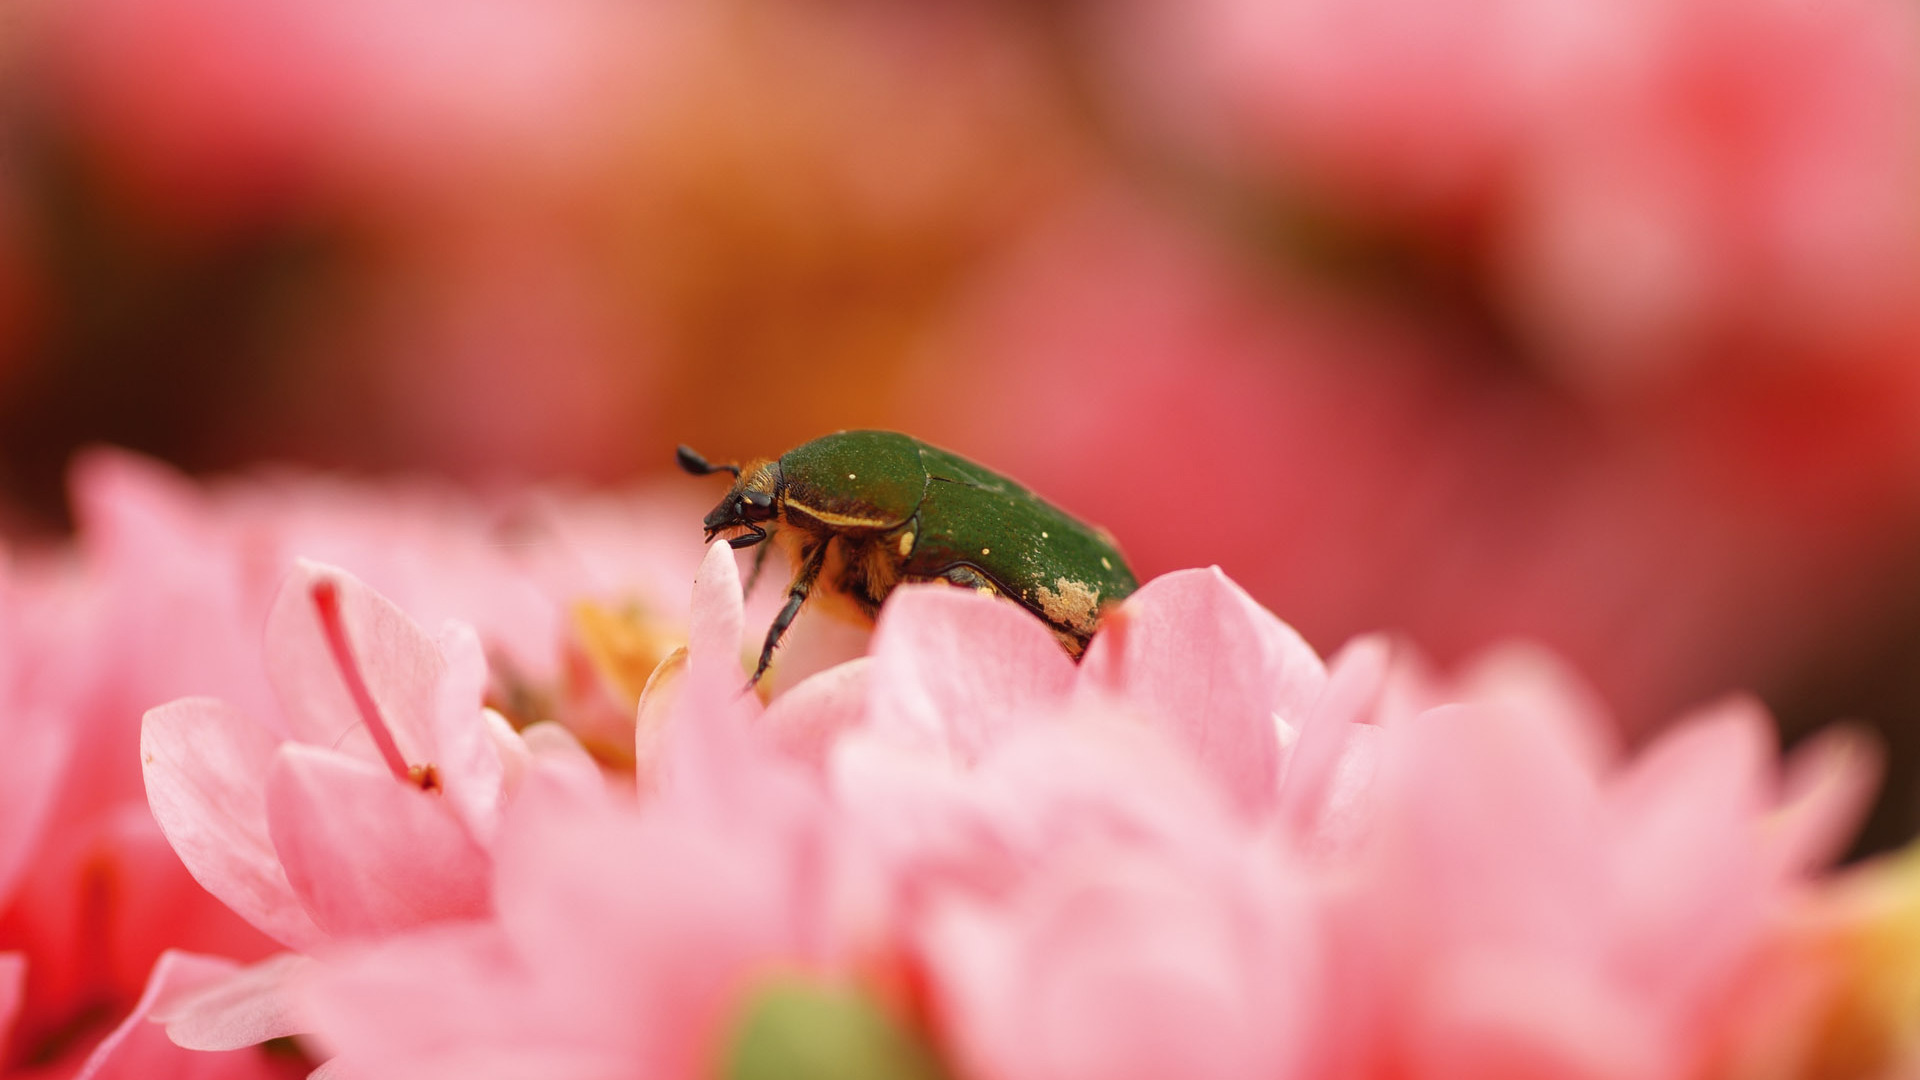 Green Beetle On Pink Flower Wallpaper